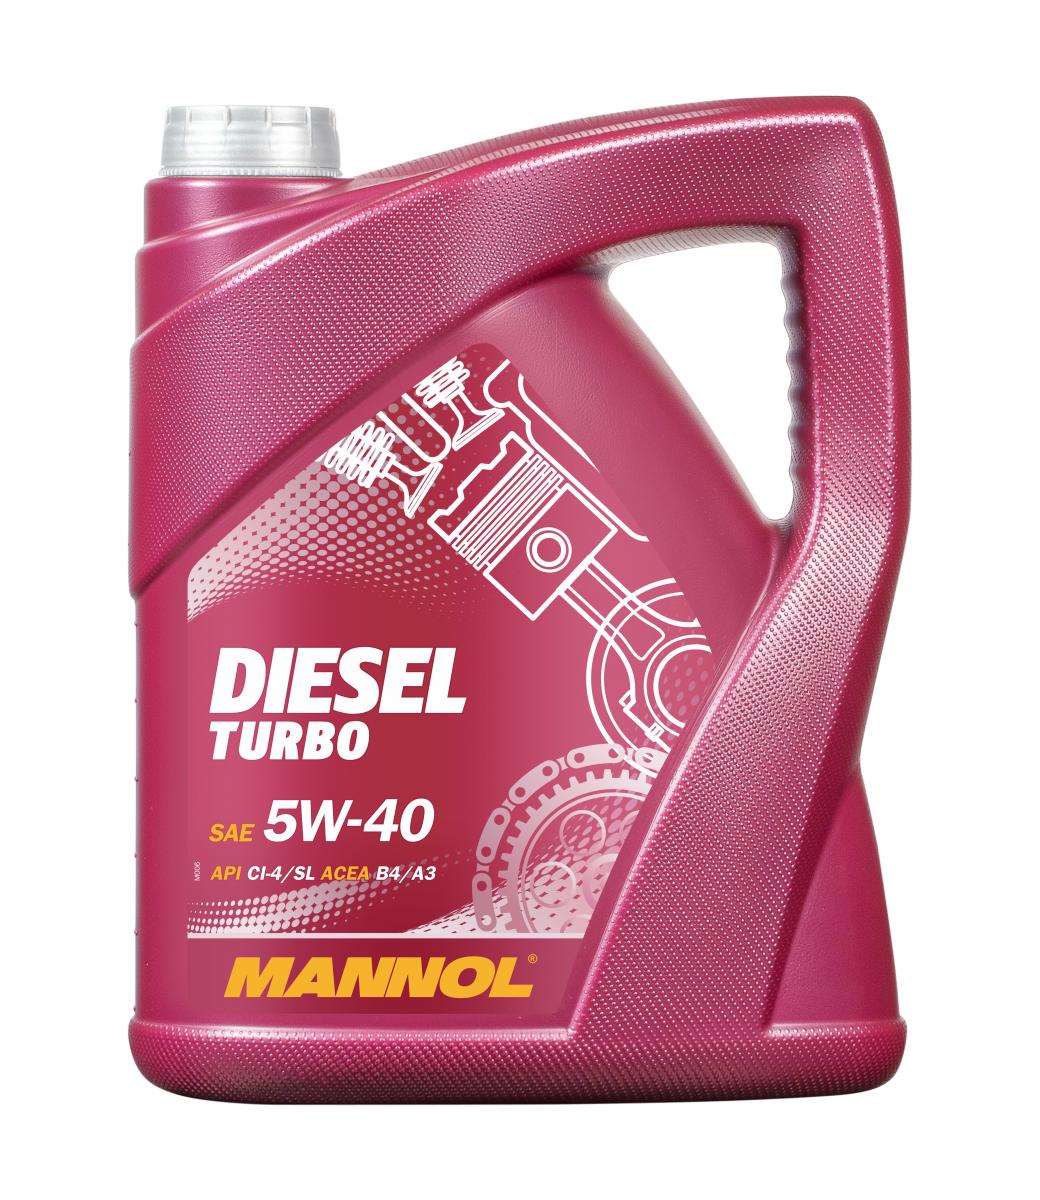 MANNOL Diesel Turbo 5W-40 Motoröl 5l